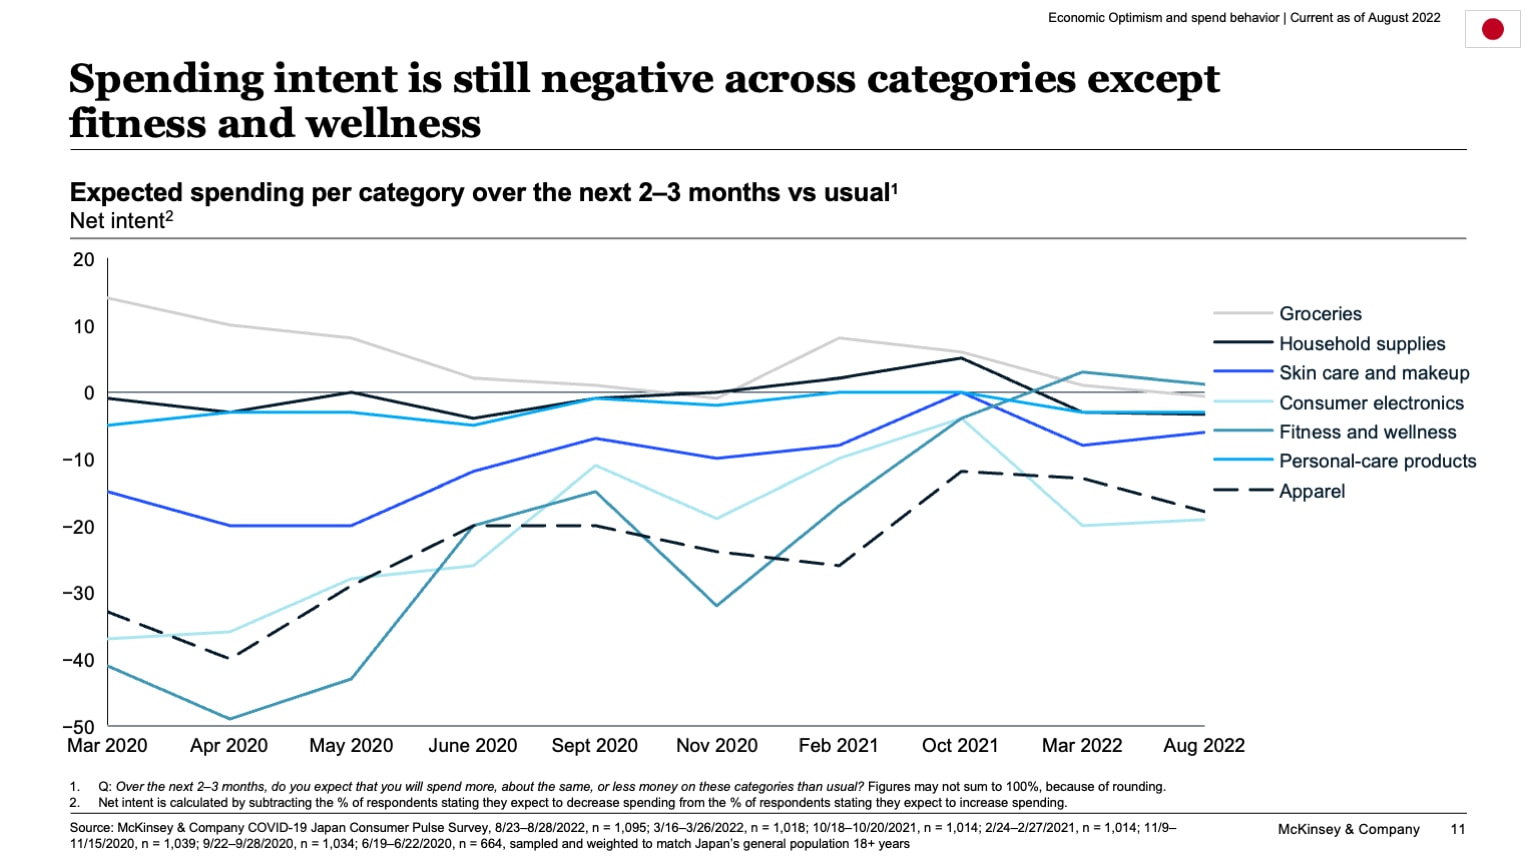 Spending intent is still negative across categories except fitness and wellness